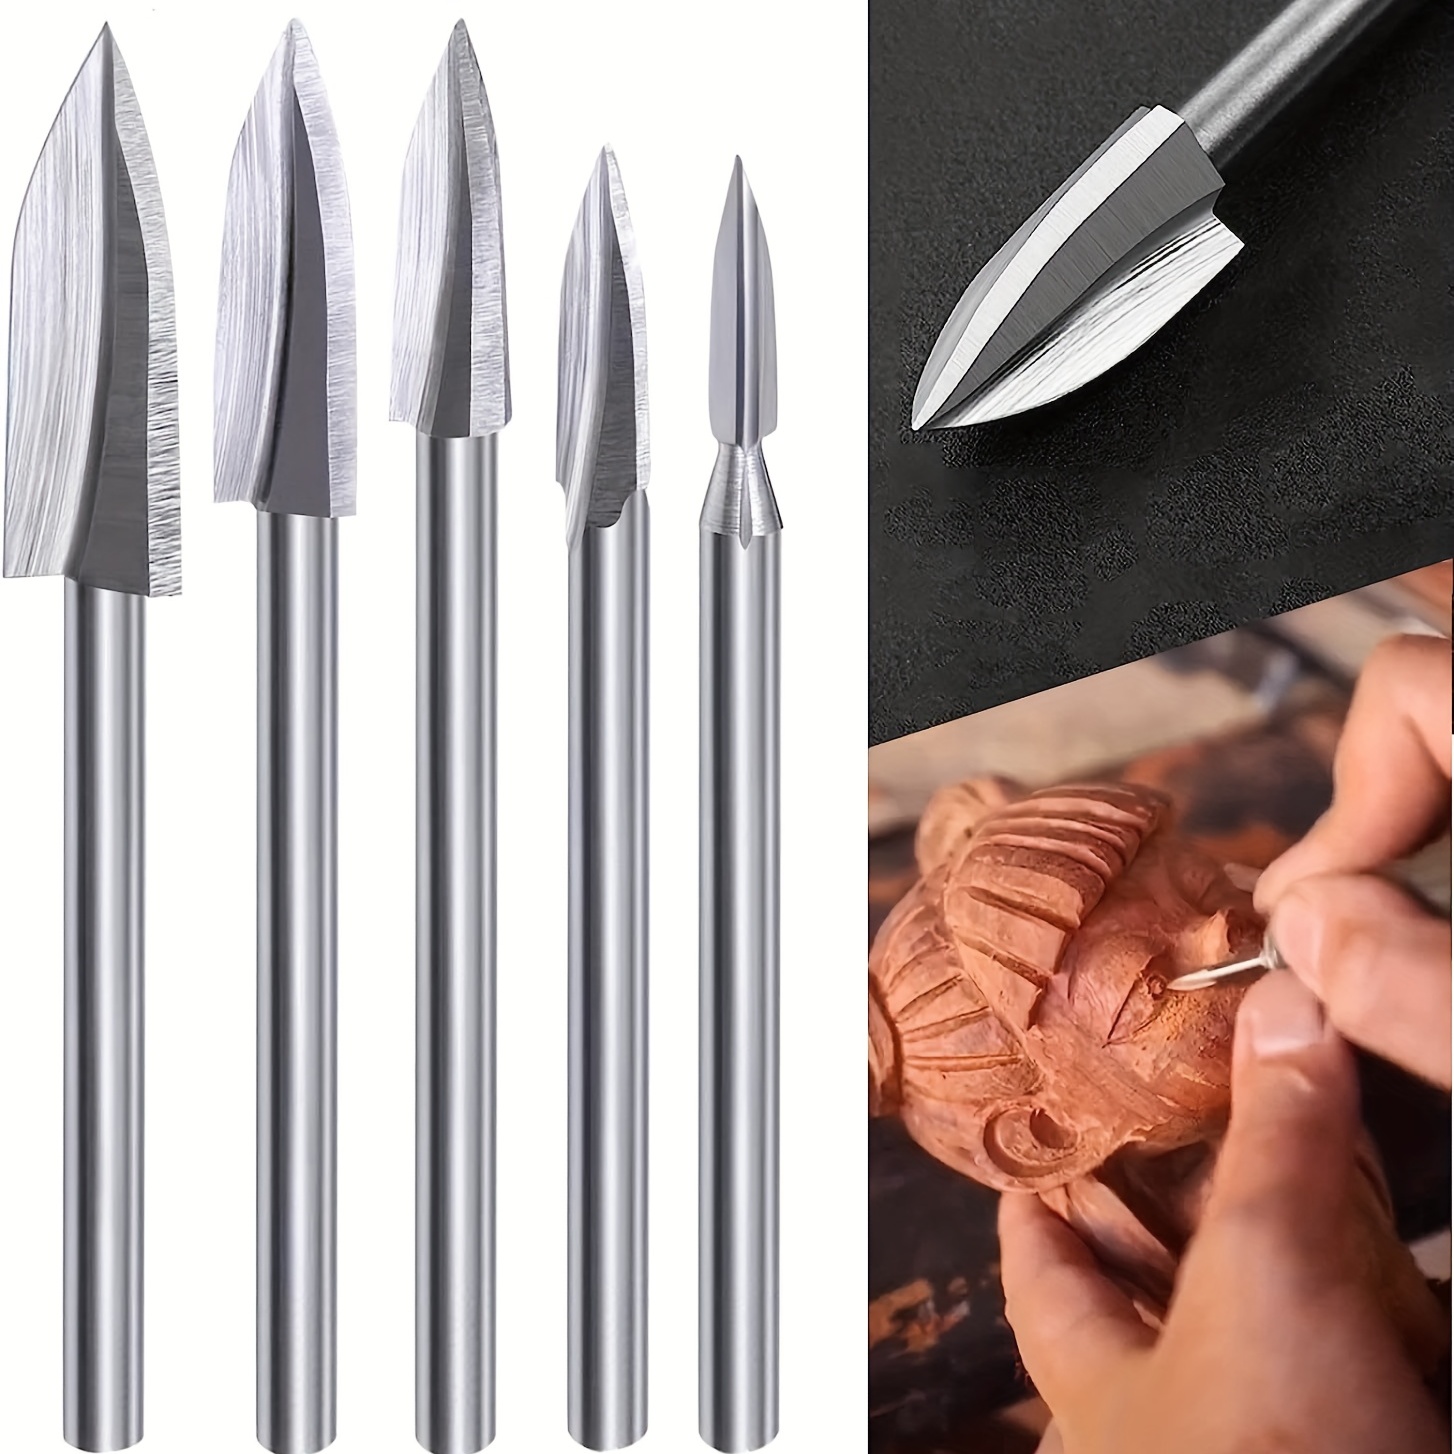 Fyrome 108 Piece Engraving Tool Kit with Scriber, Multi-Functional